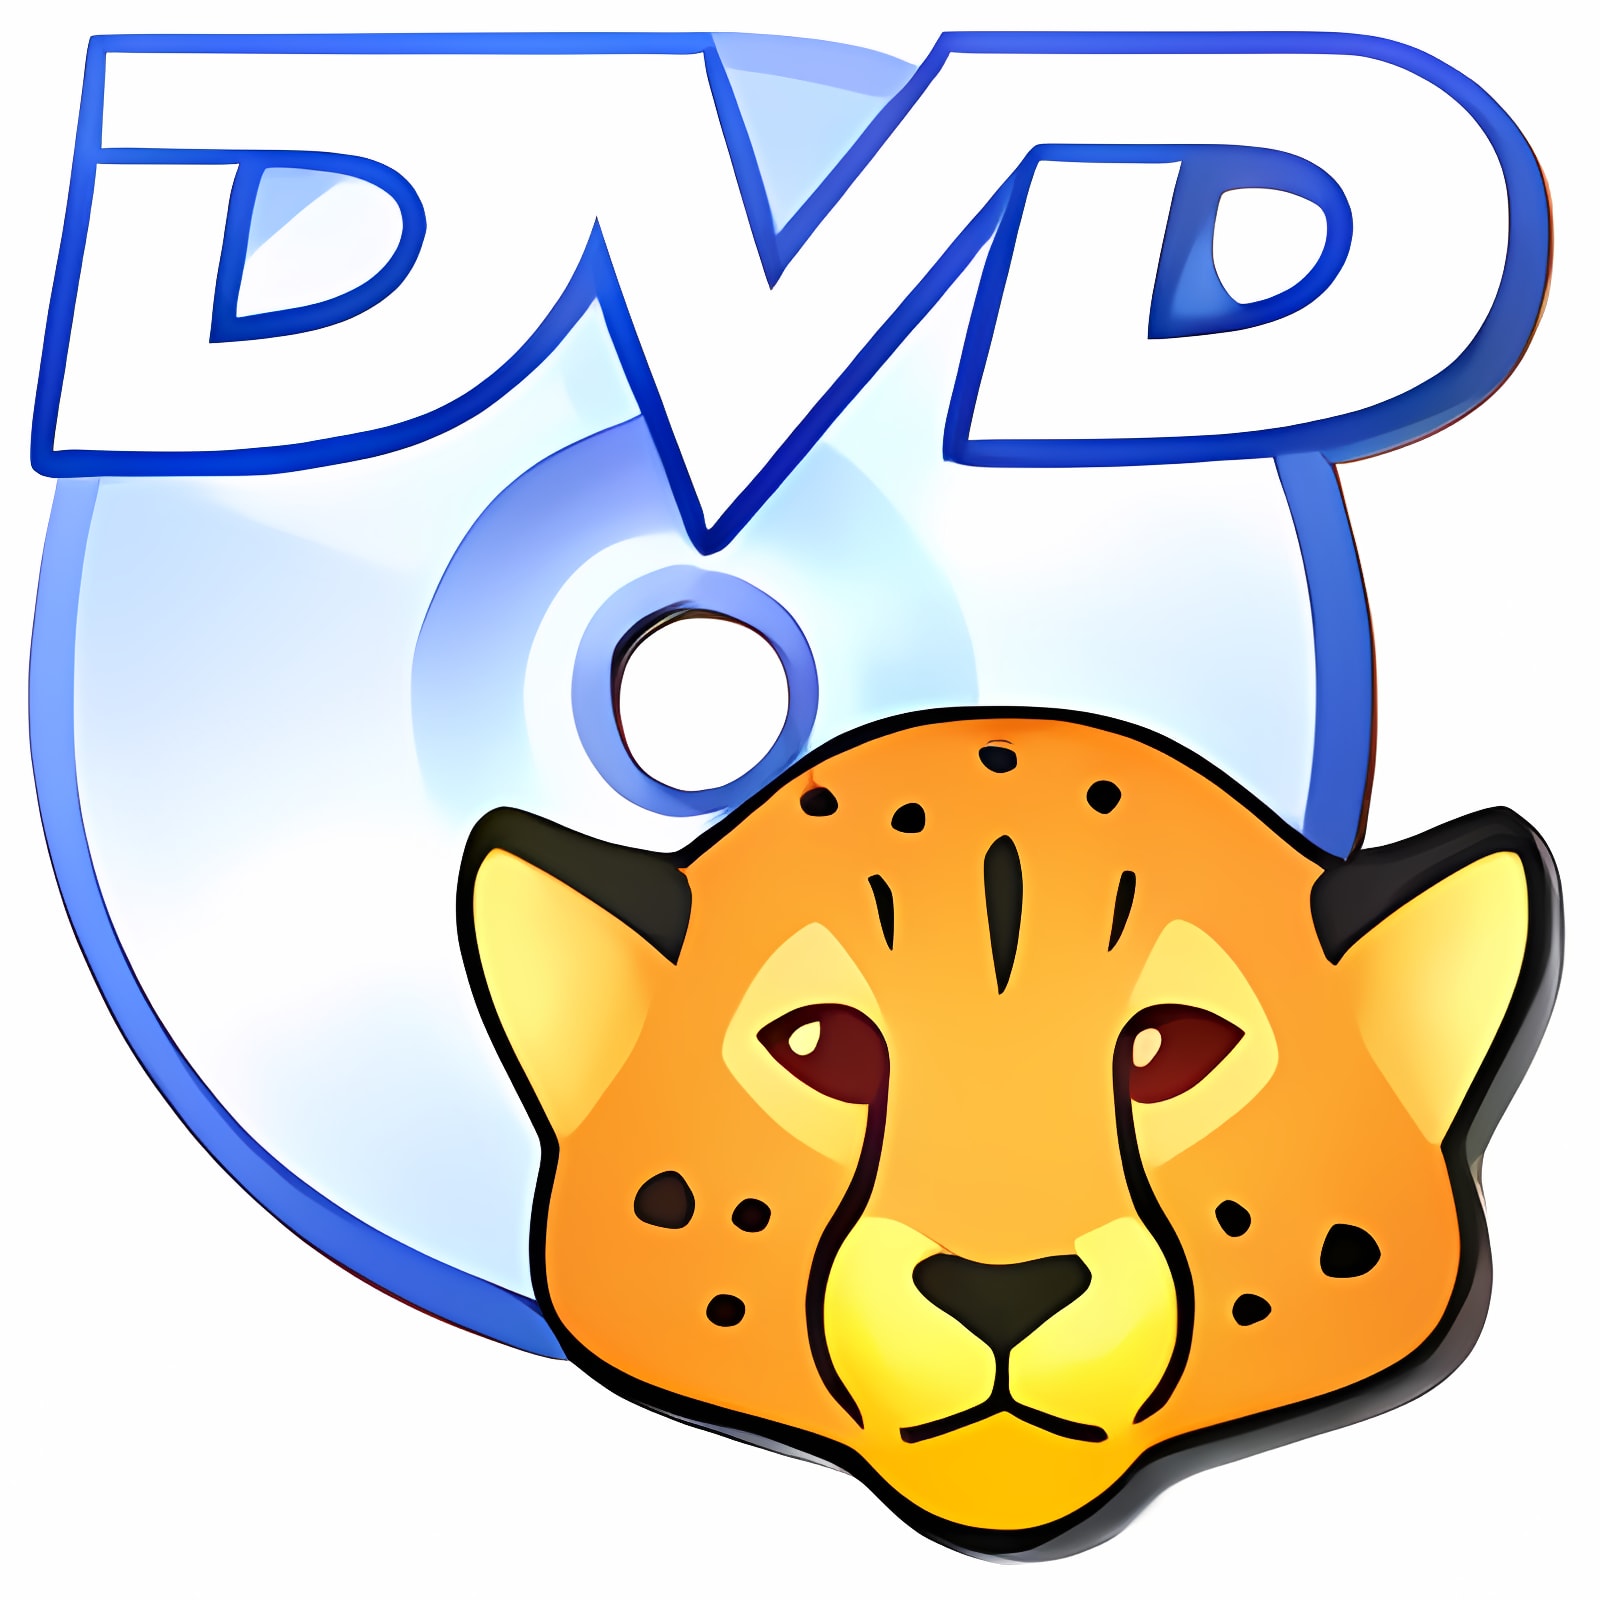 registration key for cheetah dvd burner